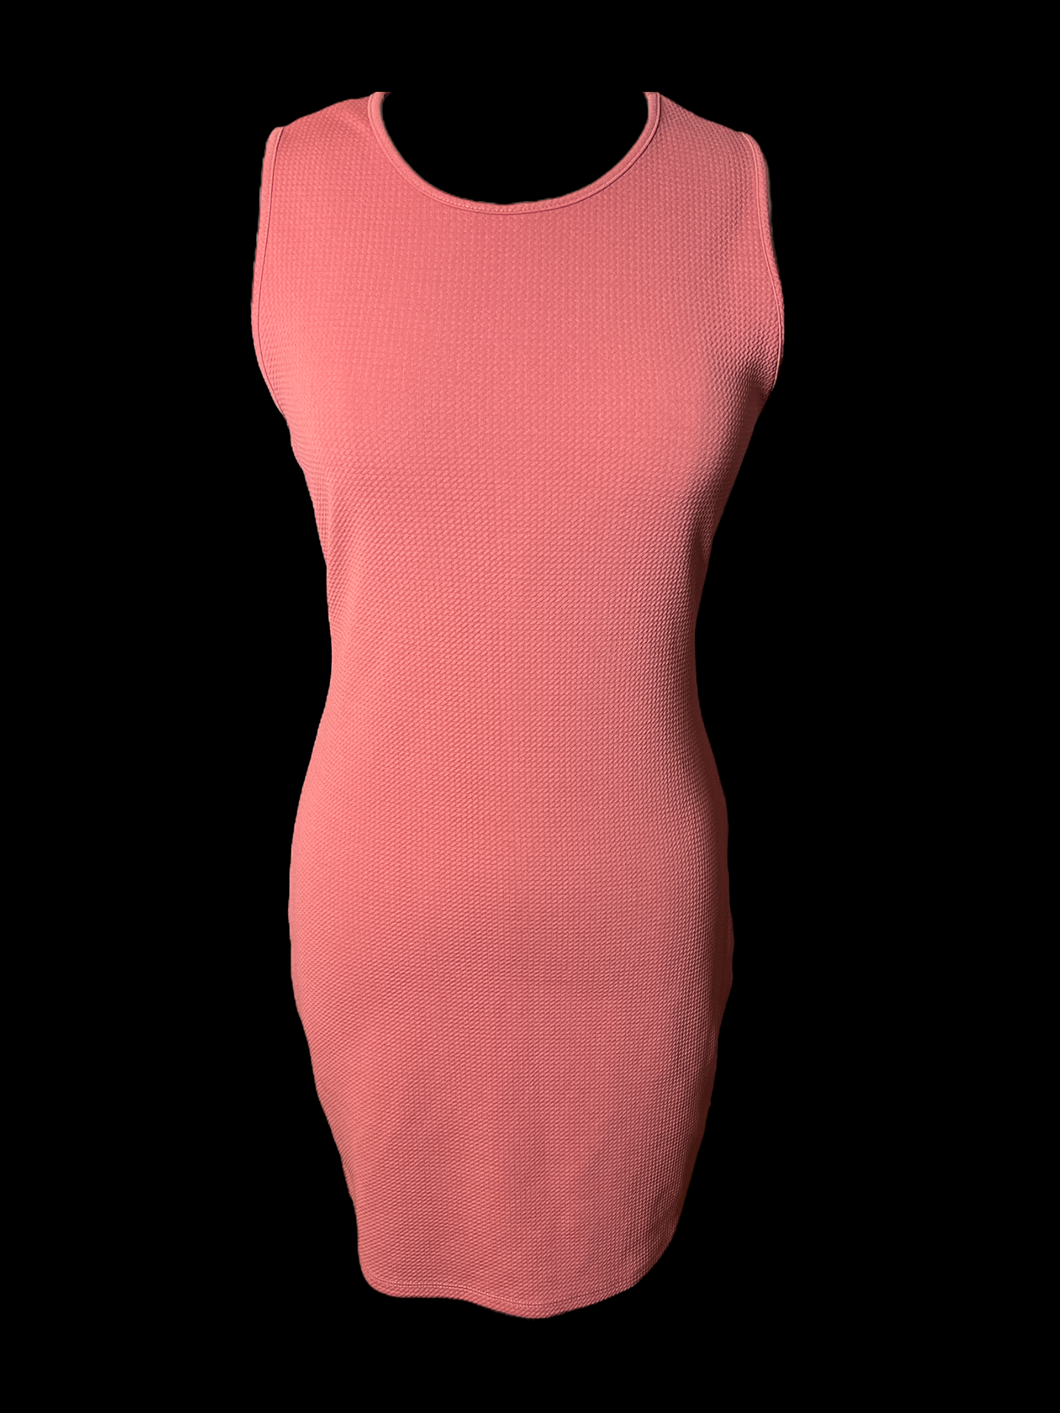 M/L Dusty pink sleeveless textured bodycon dress